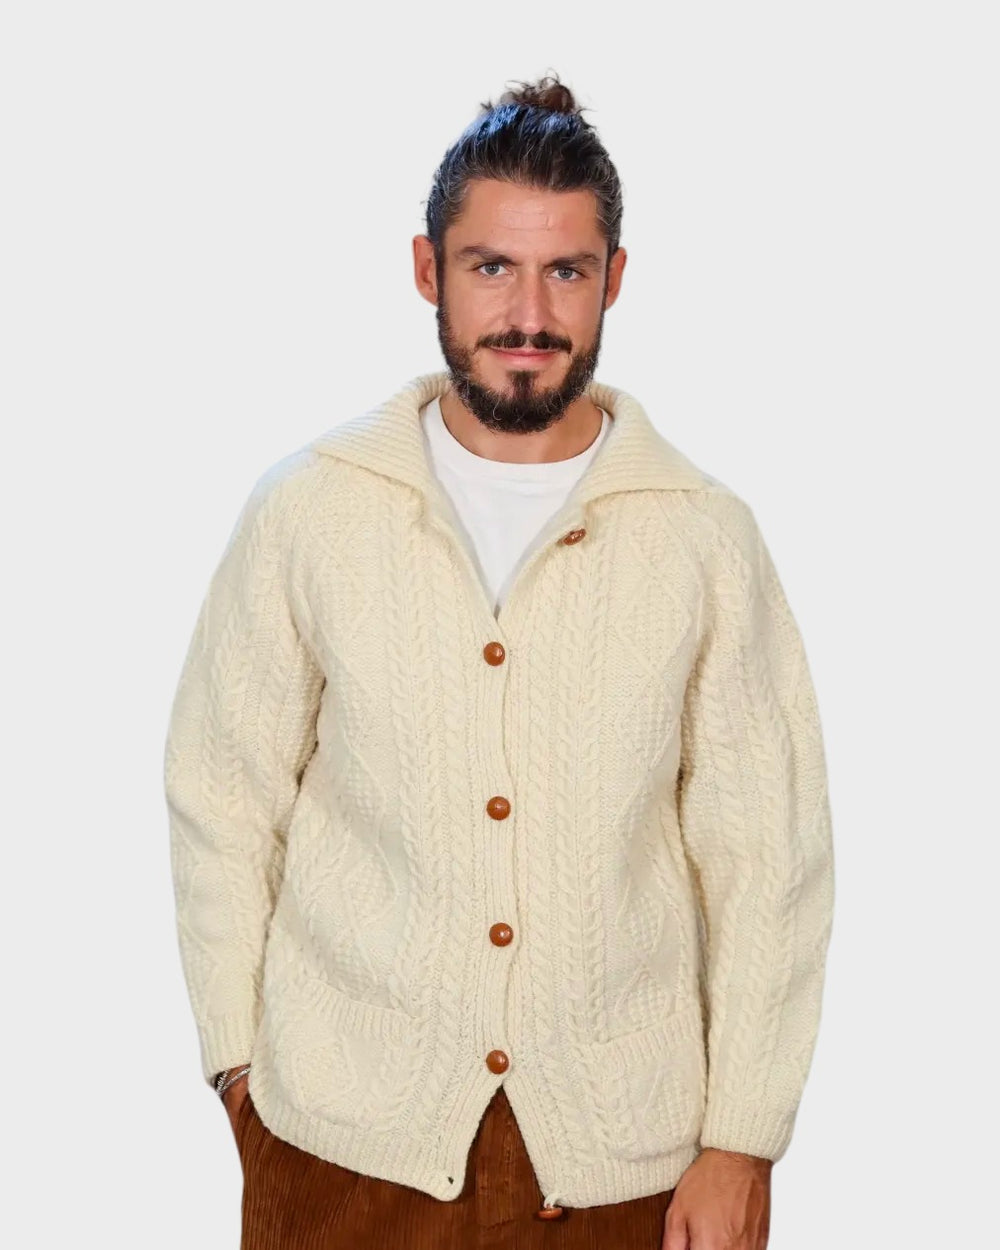 Fisherman wool cardigan - Size M